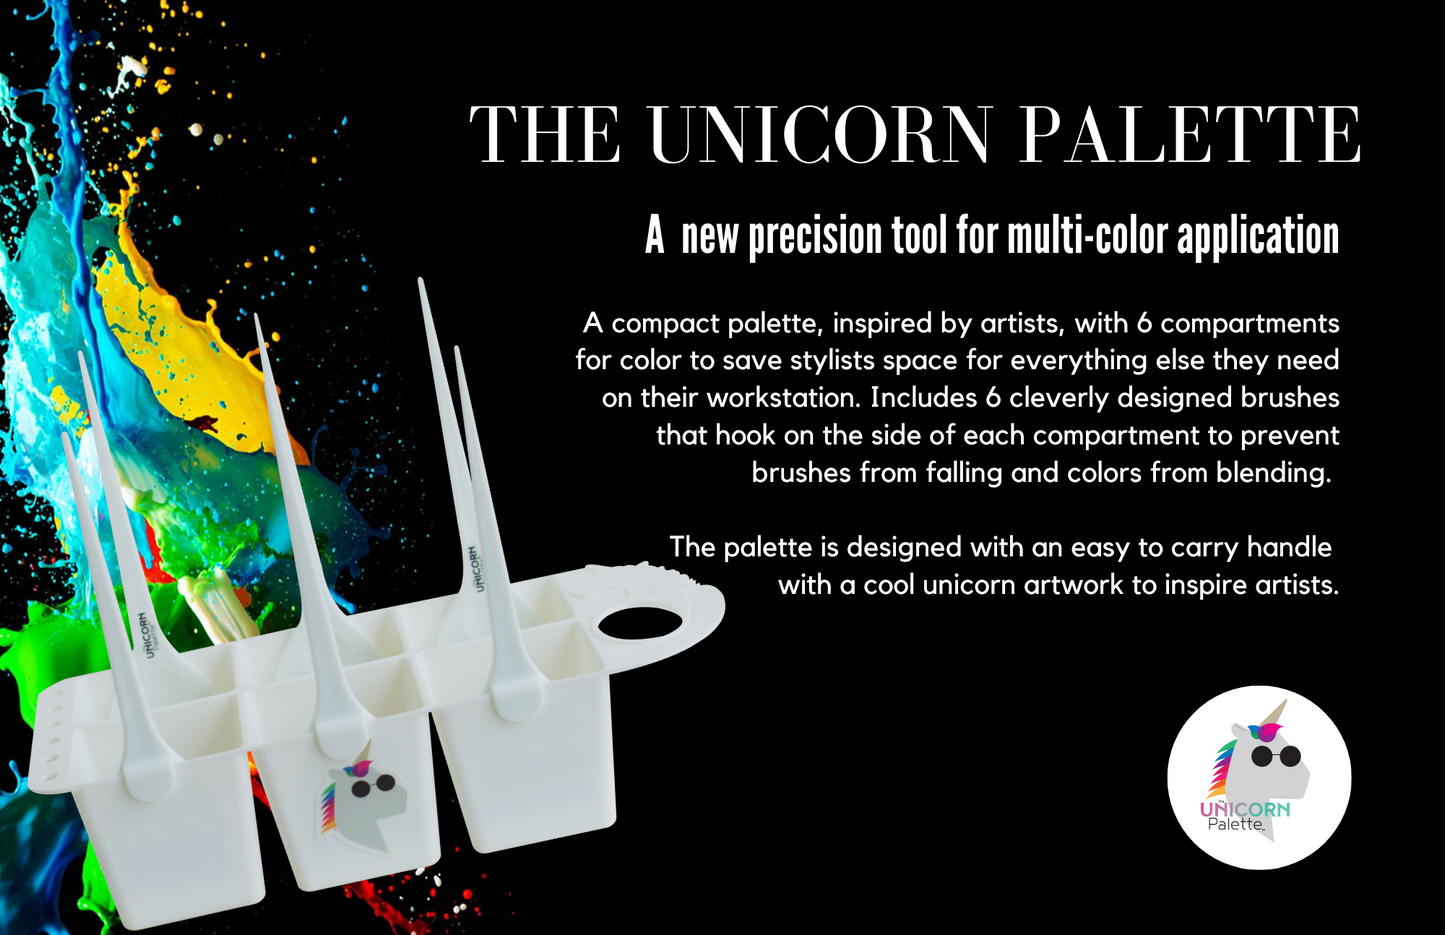 The Unicorn Palette™